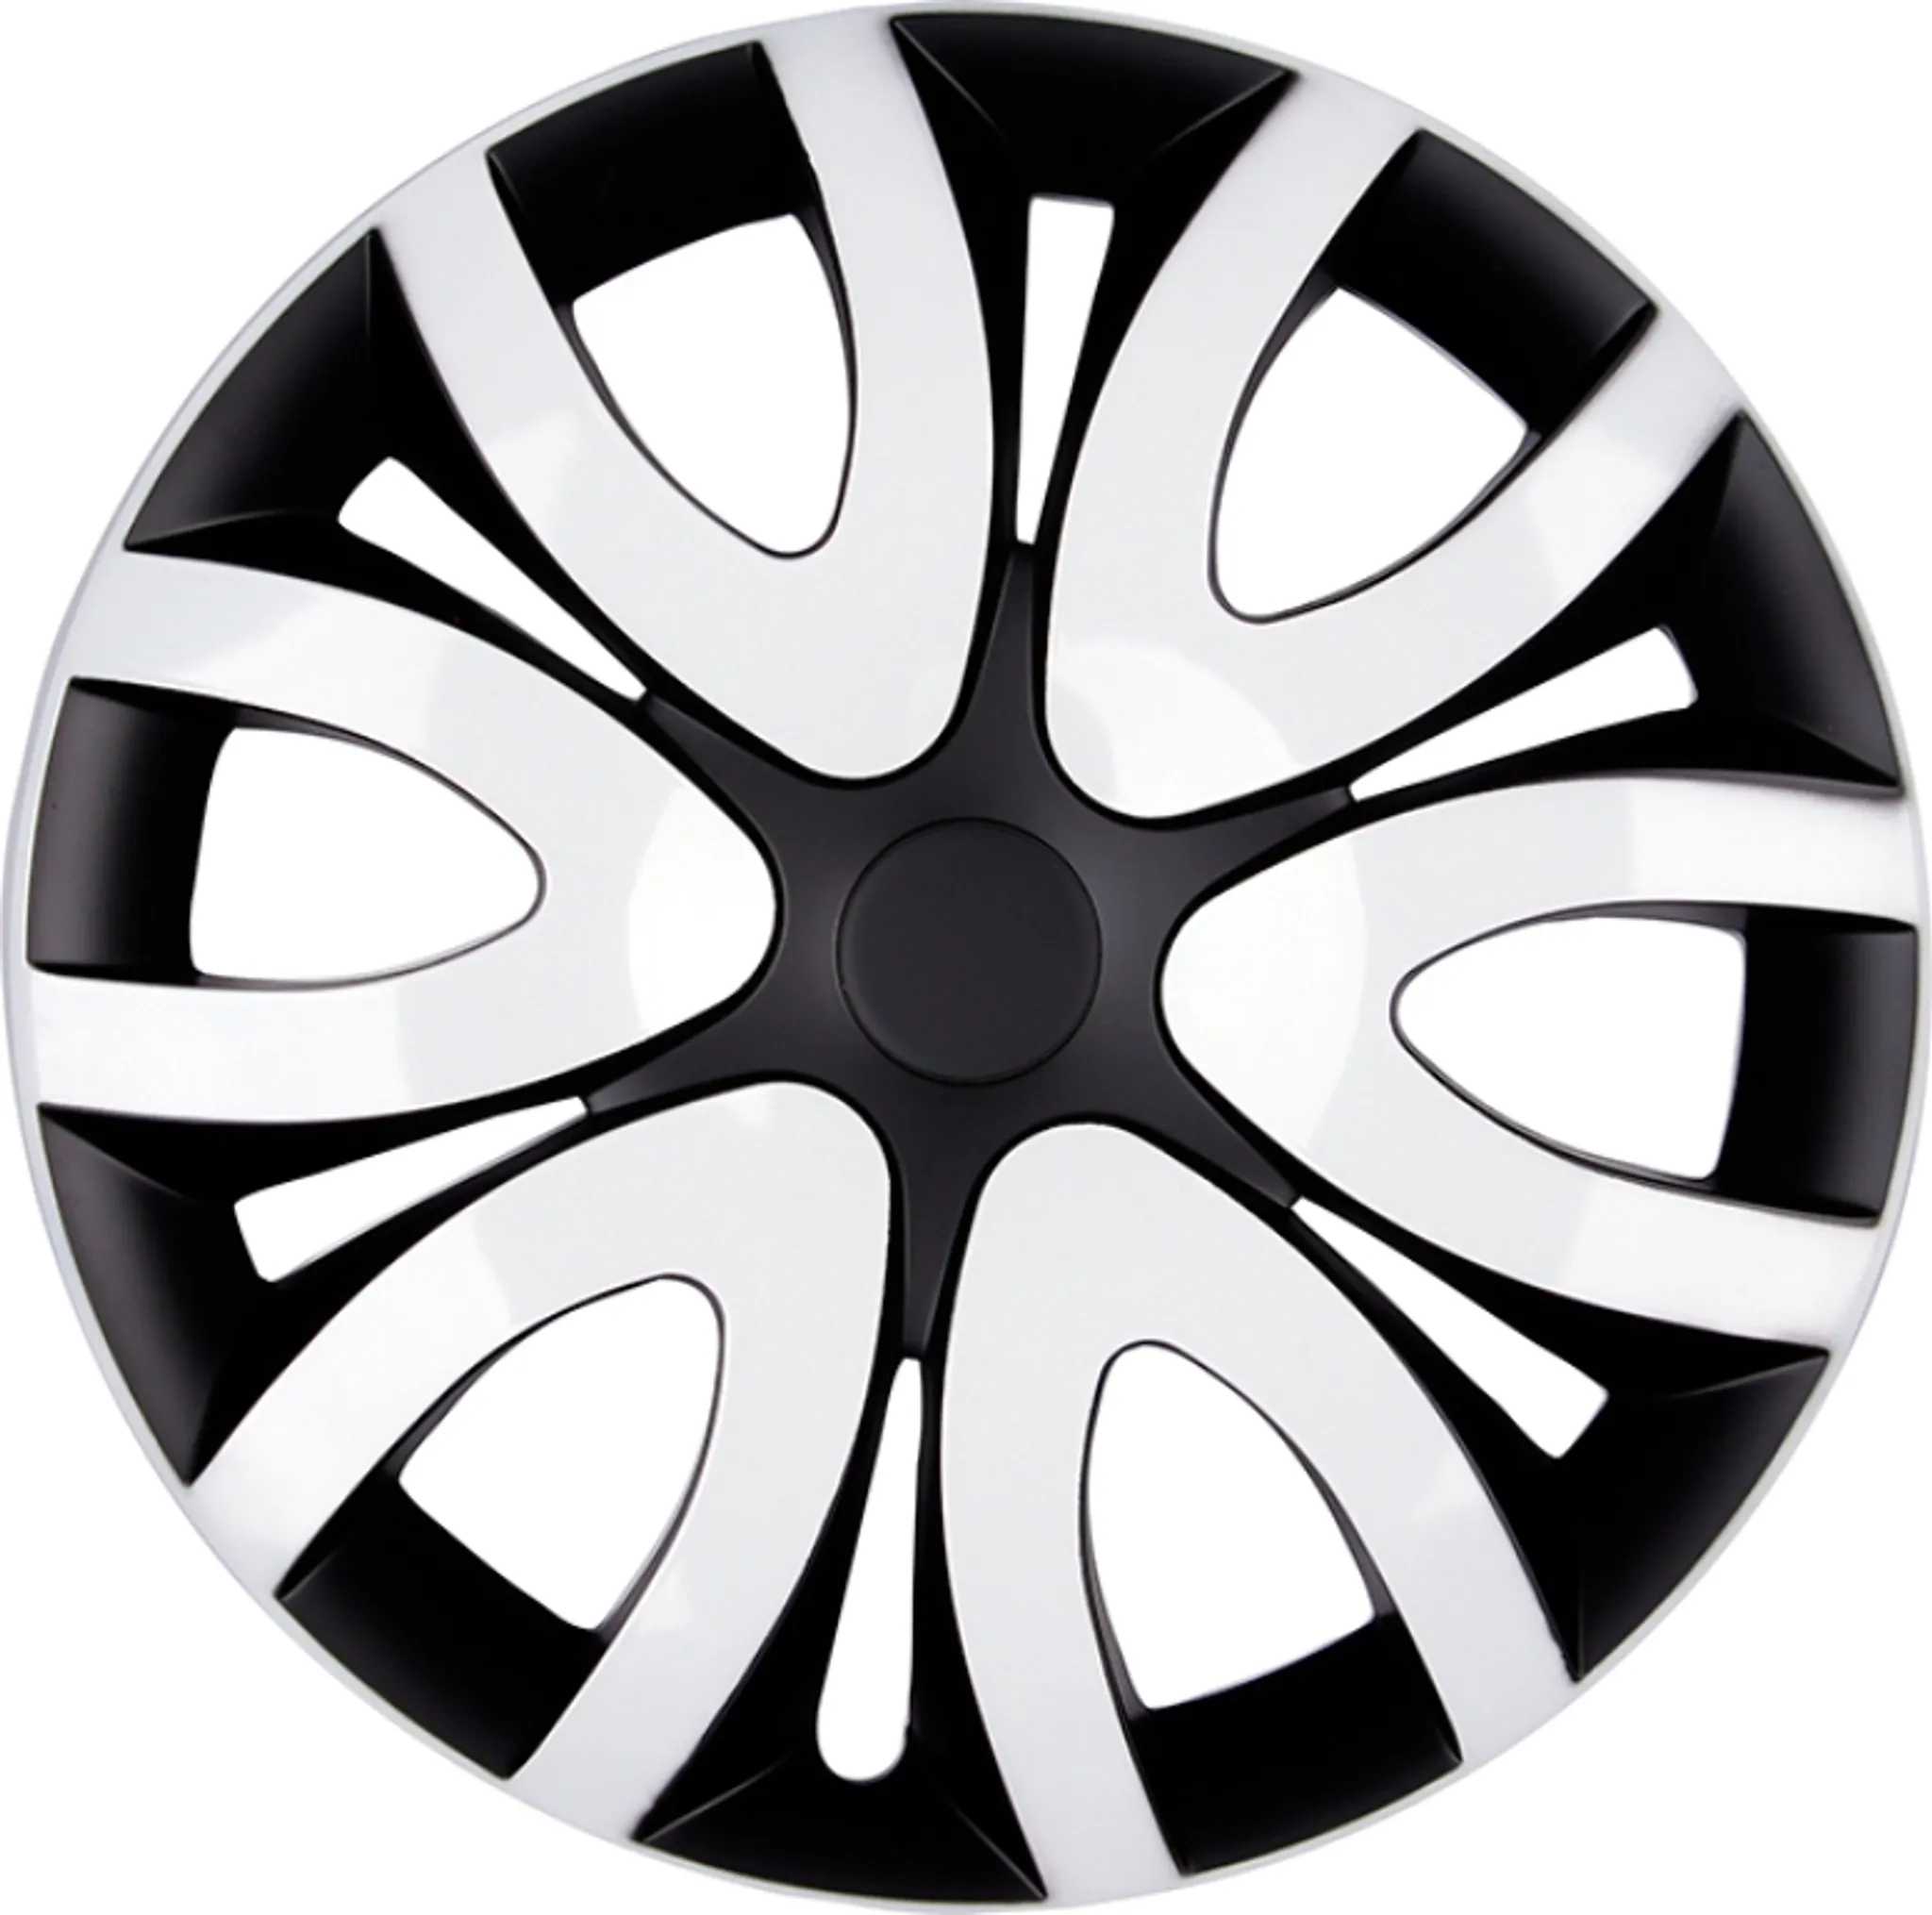 Kaufe 4x Universal Chrom Auto-Radnabenkappe Reifen Felge